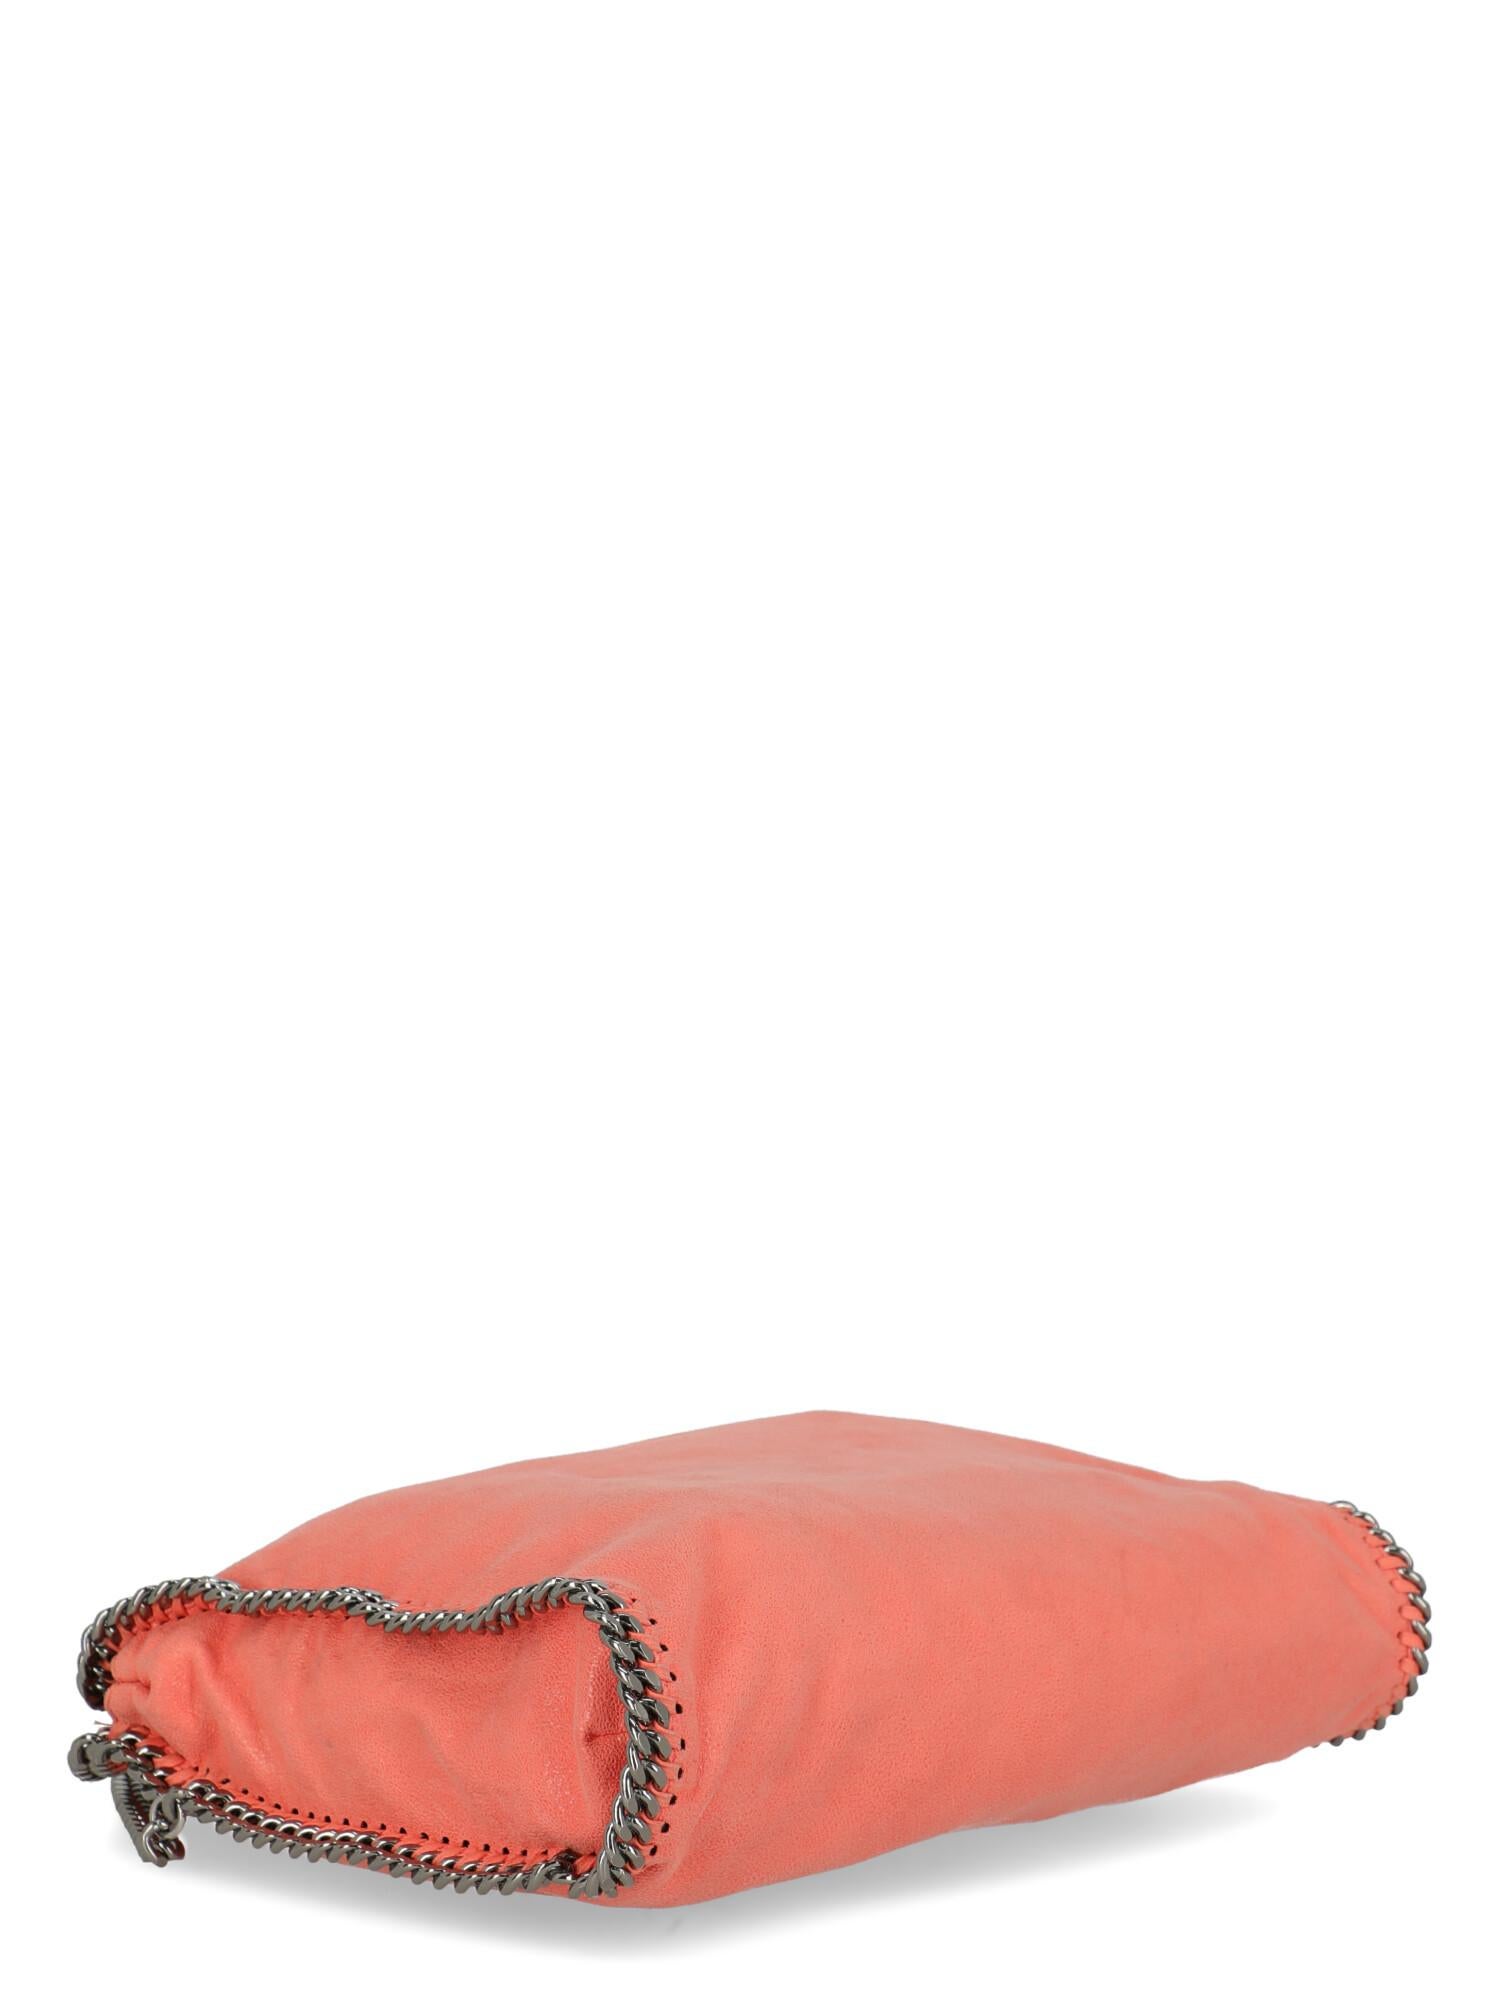 Stella Mccartney  Women   Shoulder bags  Falabella Orange Faux Leather  For Sale 1